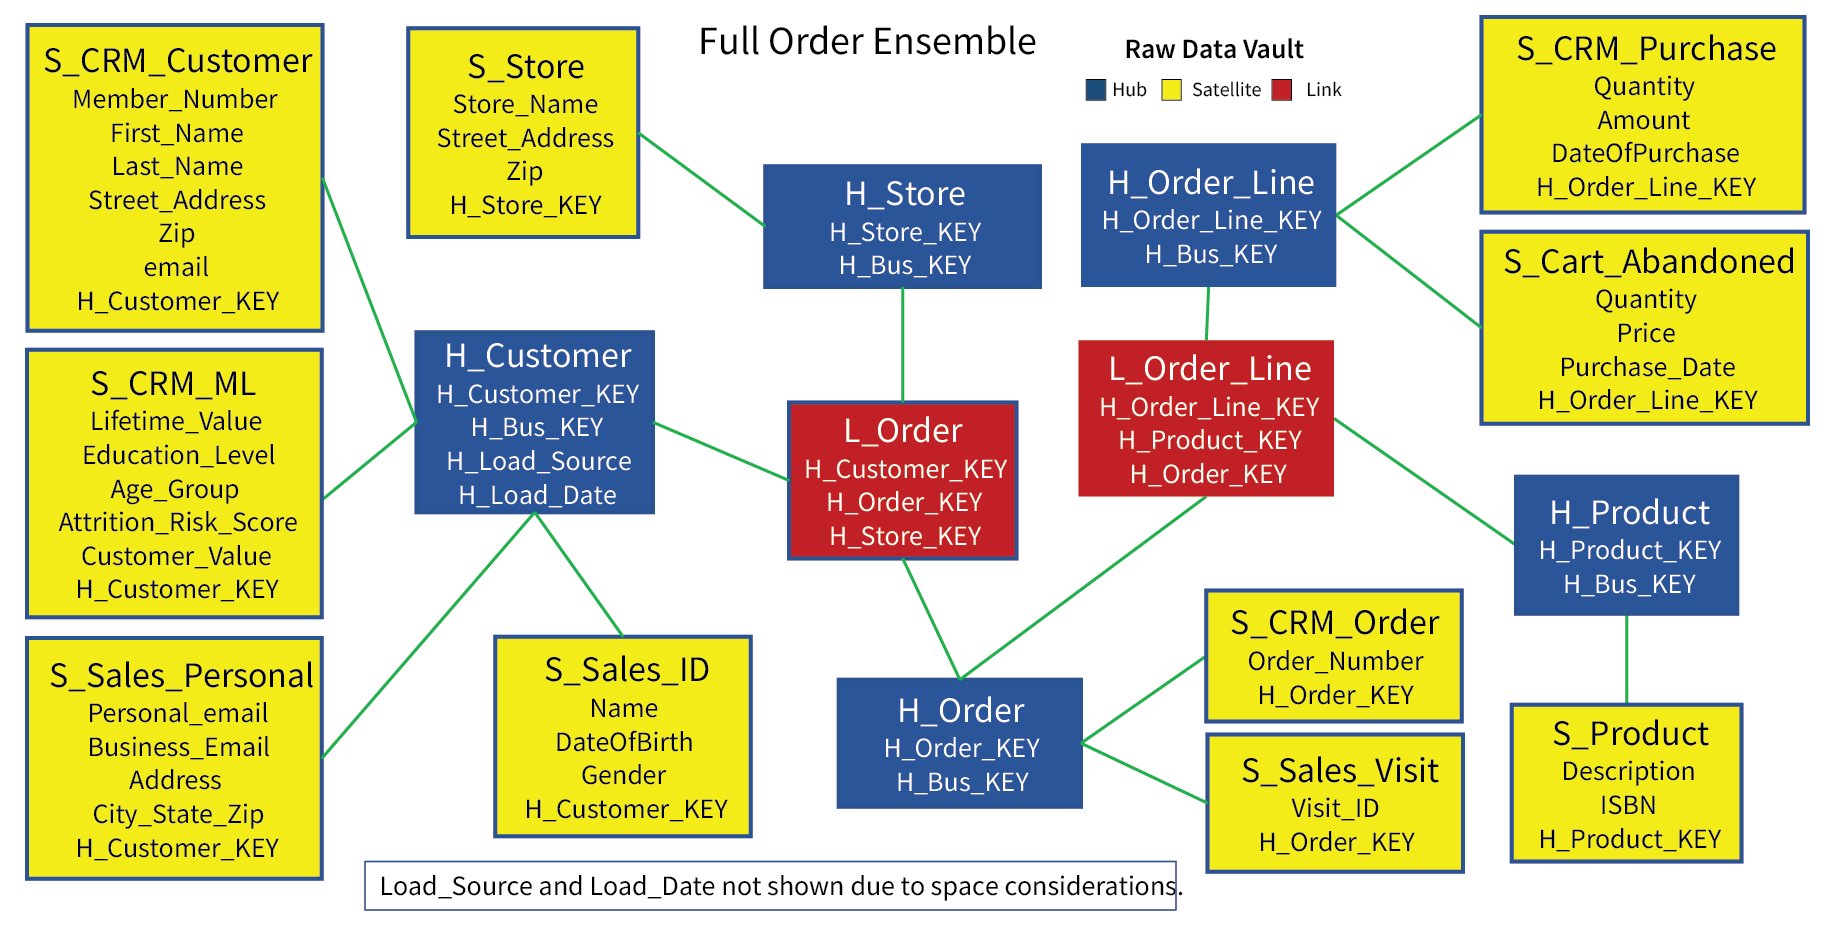 A raw data vault ensemble of a sales orders.